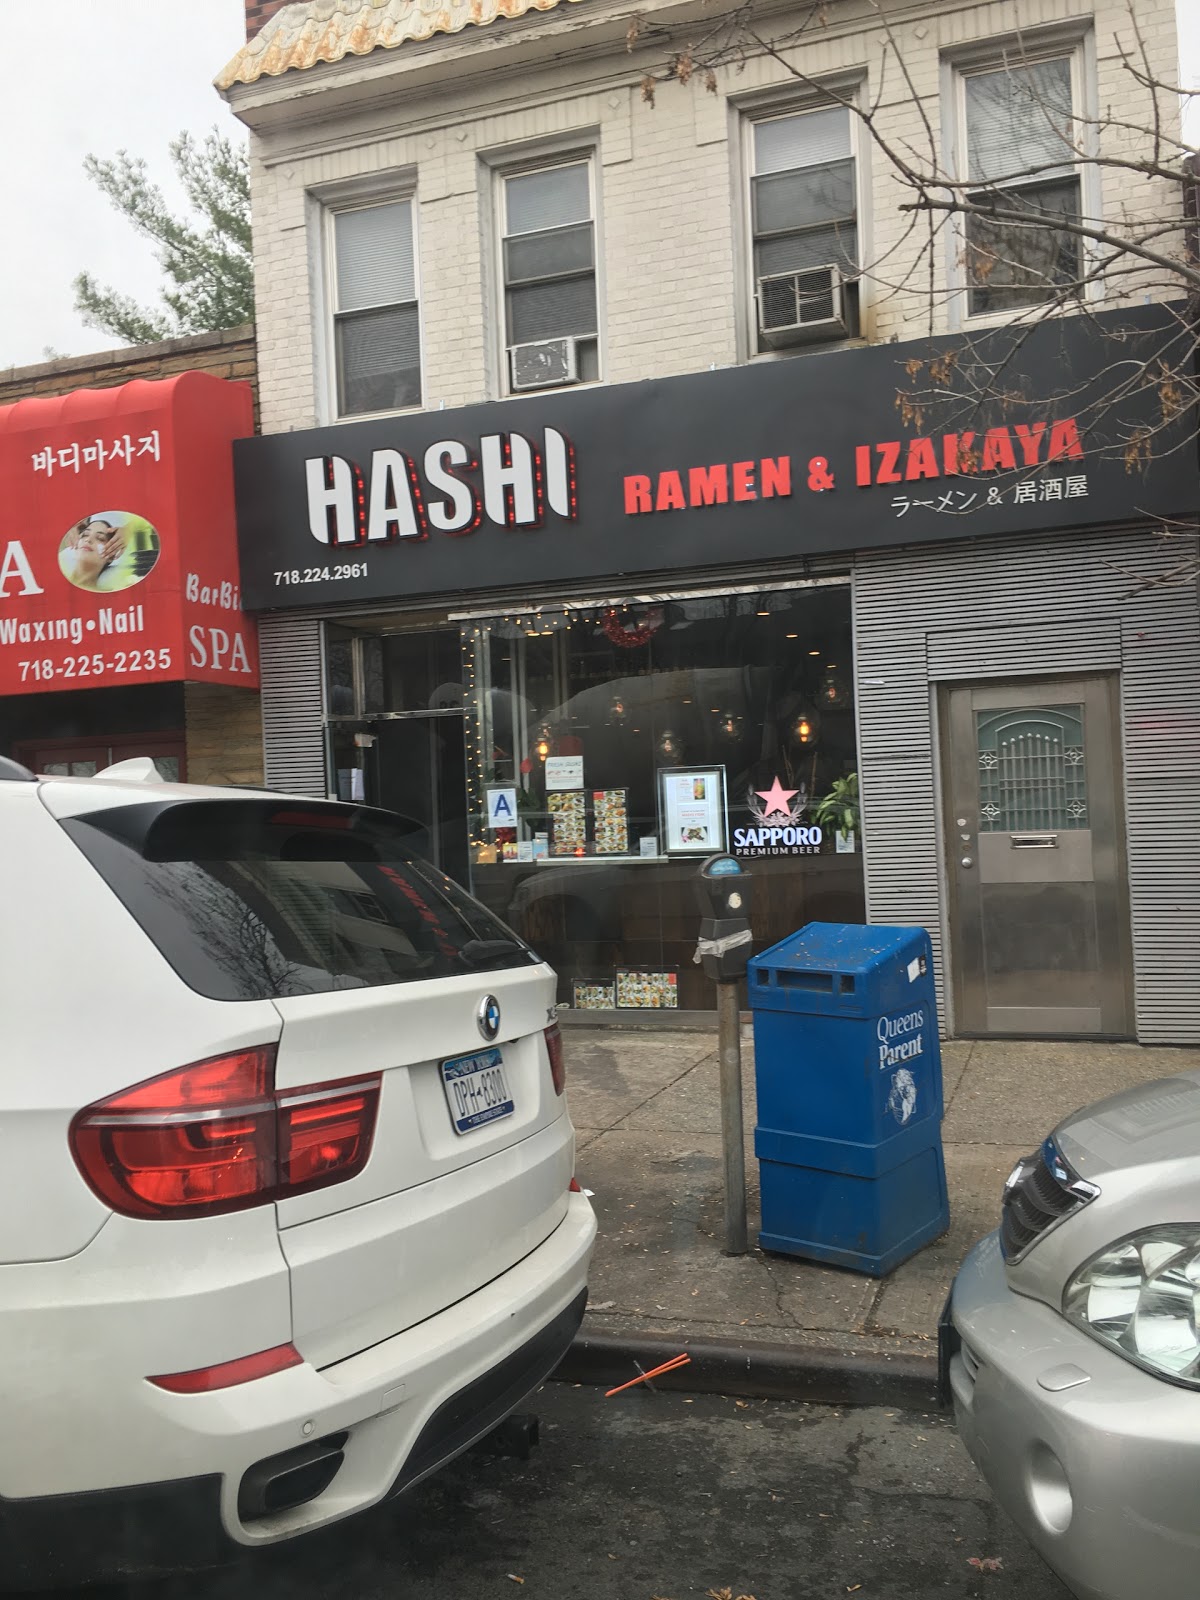 Photo of Hashi Ramen & Izakaya Inc in Queens City, New York, United States - 3 Picture of Restaurant, Food, Point of interest, Establishment